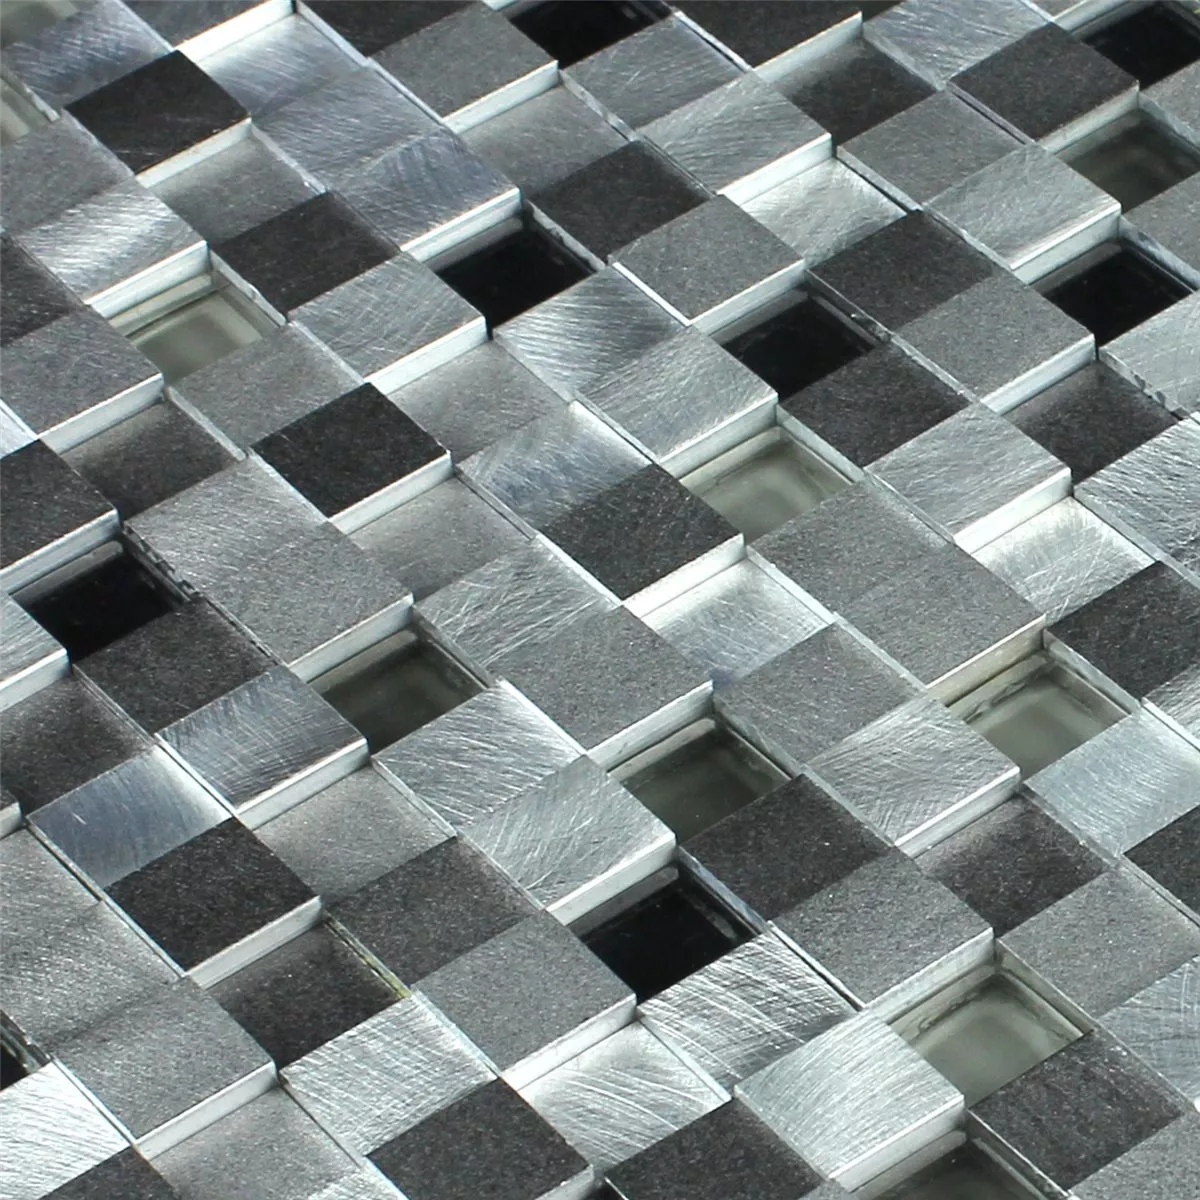 Sample Design Tiles Aluminium Alu Glass D Mosaic Black Mix